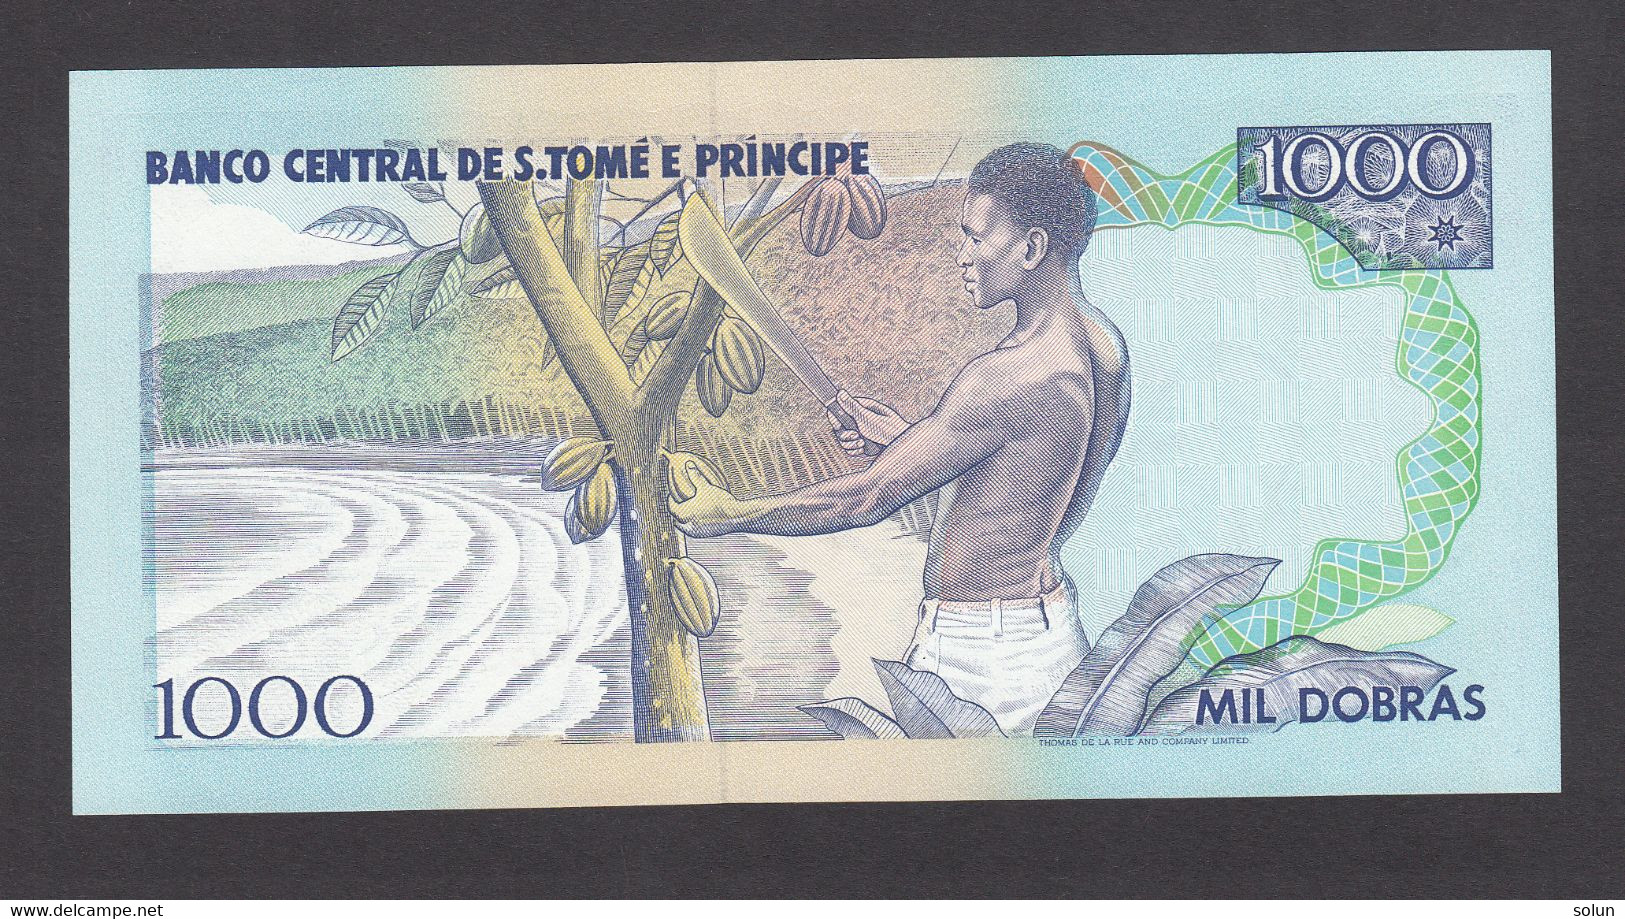 1000 MIL DOBRAS 1993 BANCO CENTRAL DE S.TOME E PRINCIPE BANKNOTE SAO TOME E PRINCIPE - Sao Tomé Et Principe